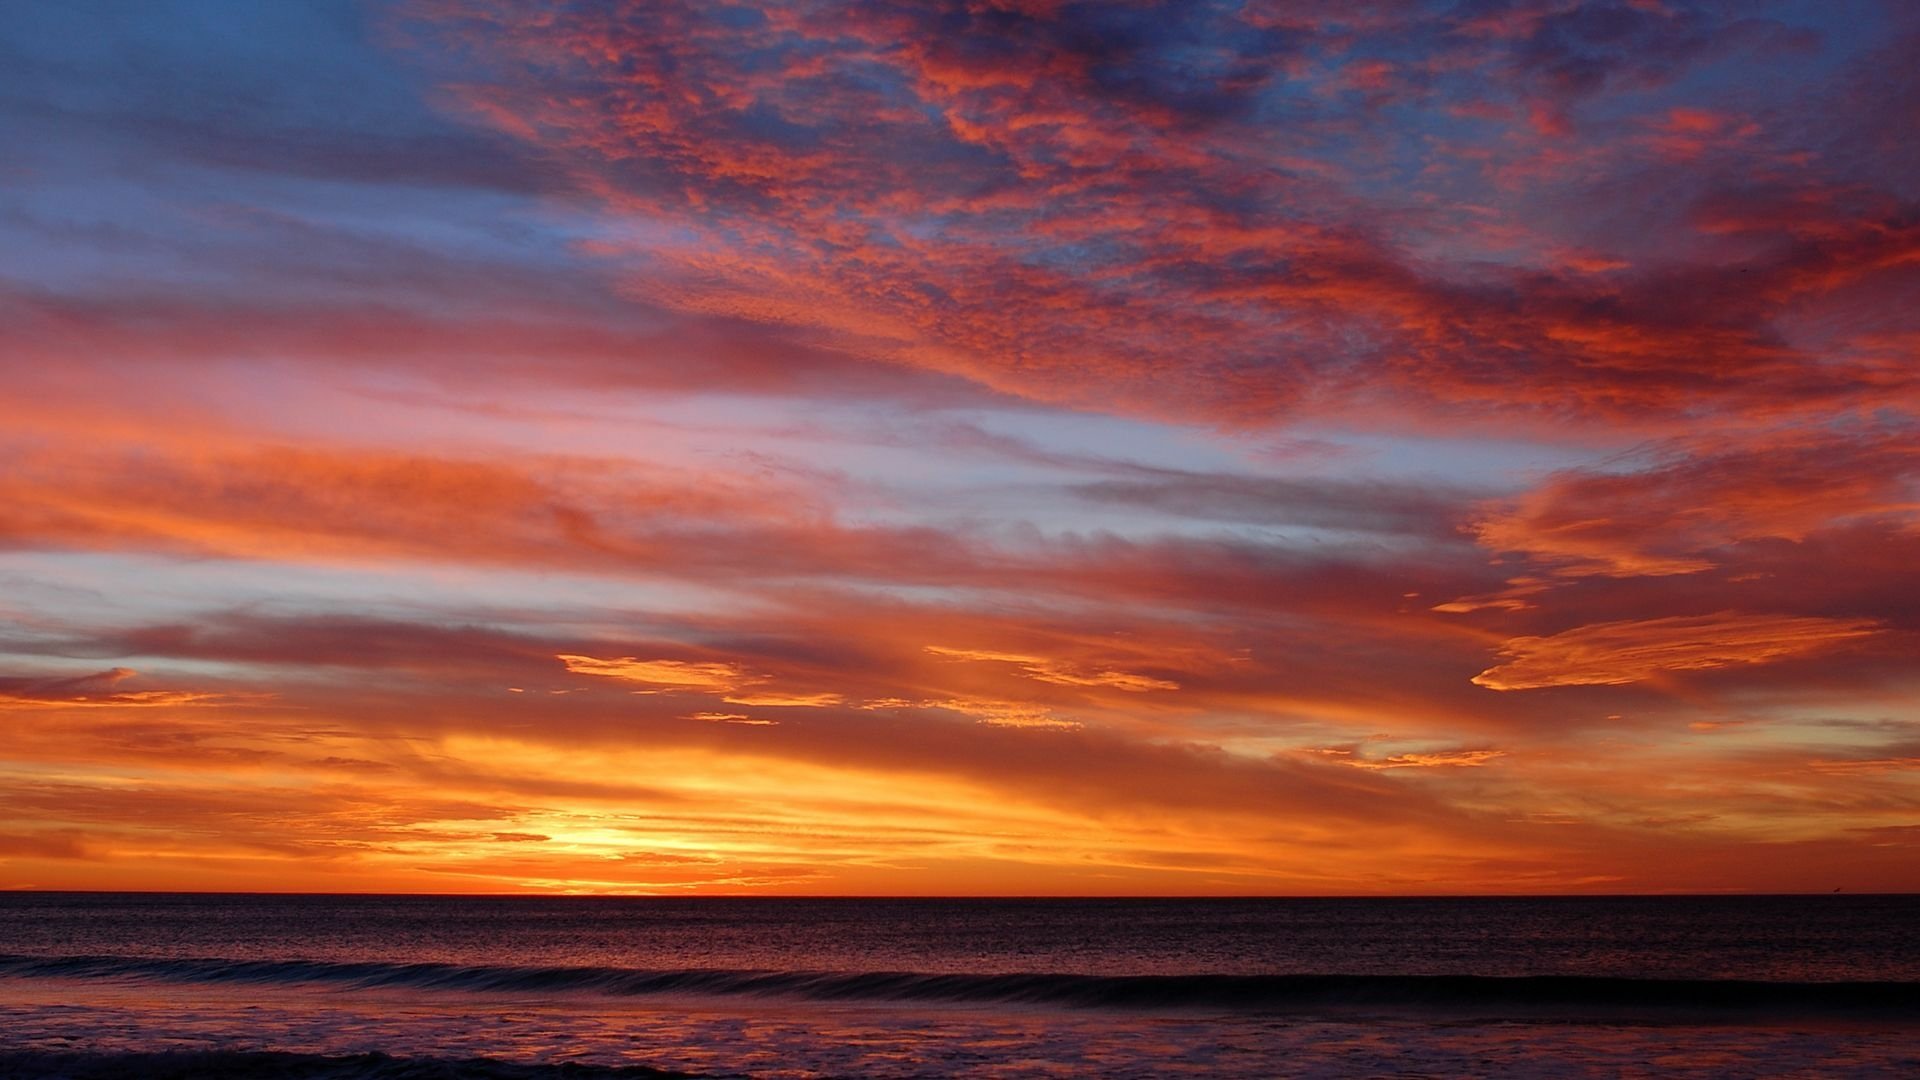 Ocean Sunset Hd Wallpaper Background Image 1920x1080